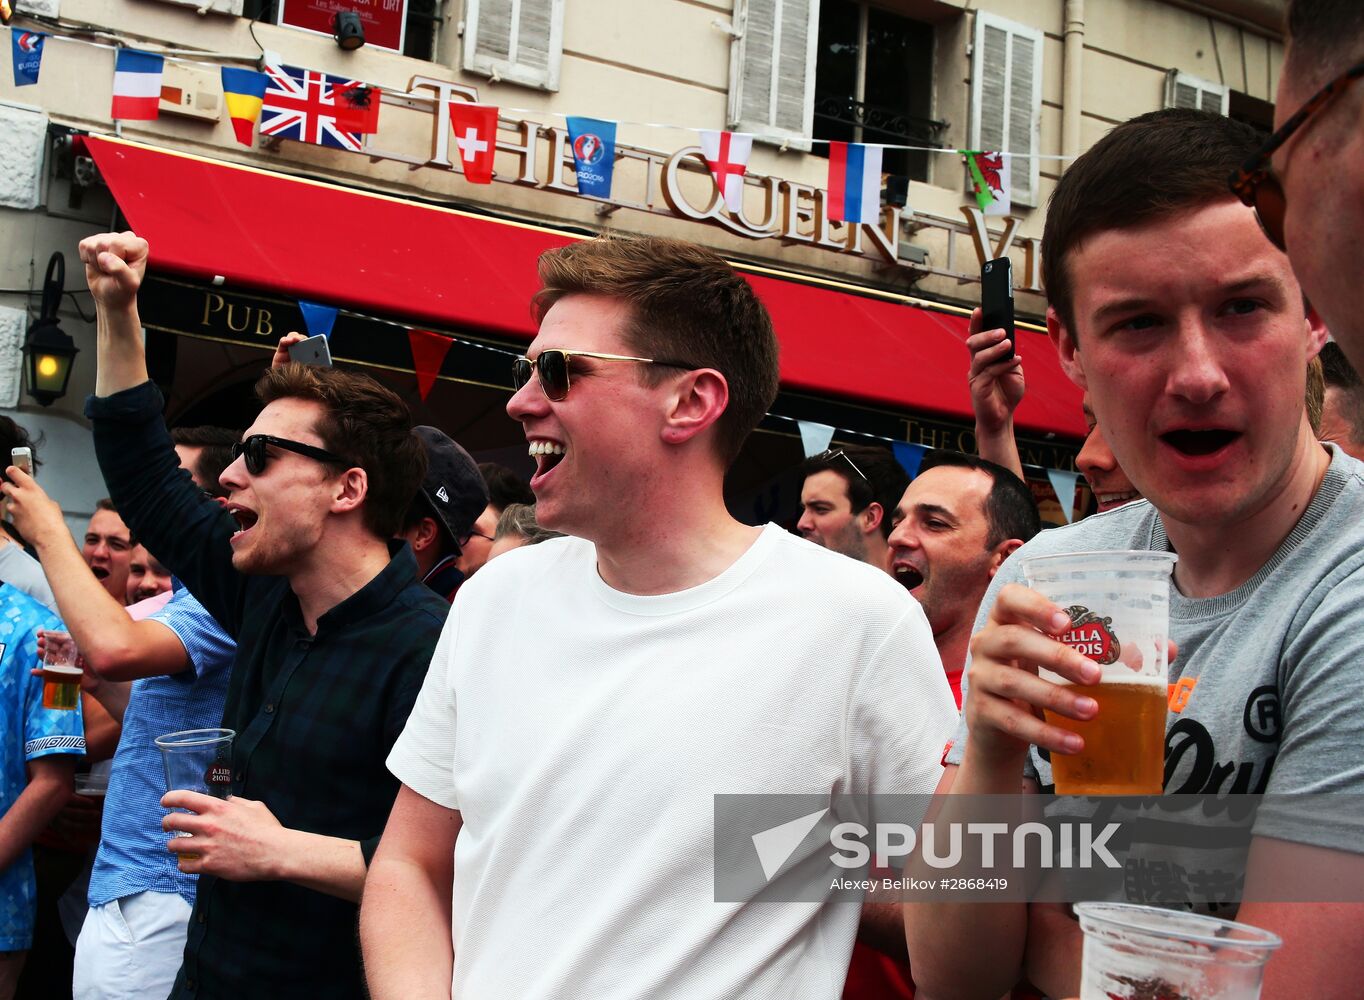 England team's fans in Marseille